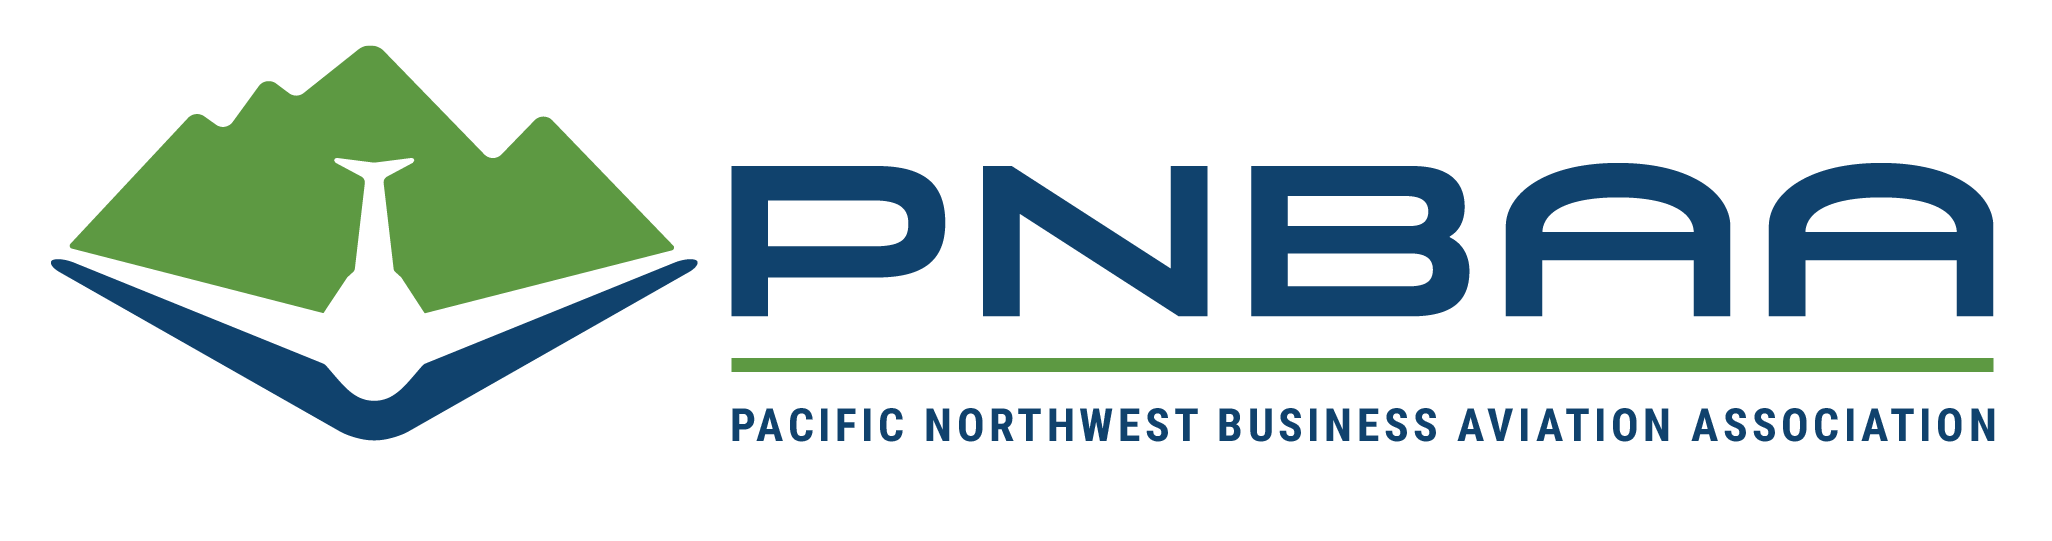 Pacific Northwest Business Aviation Association